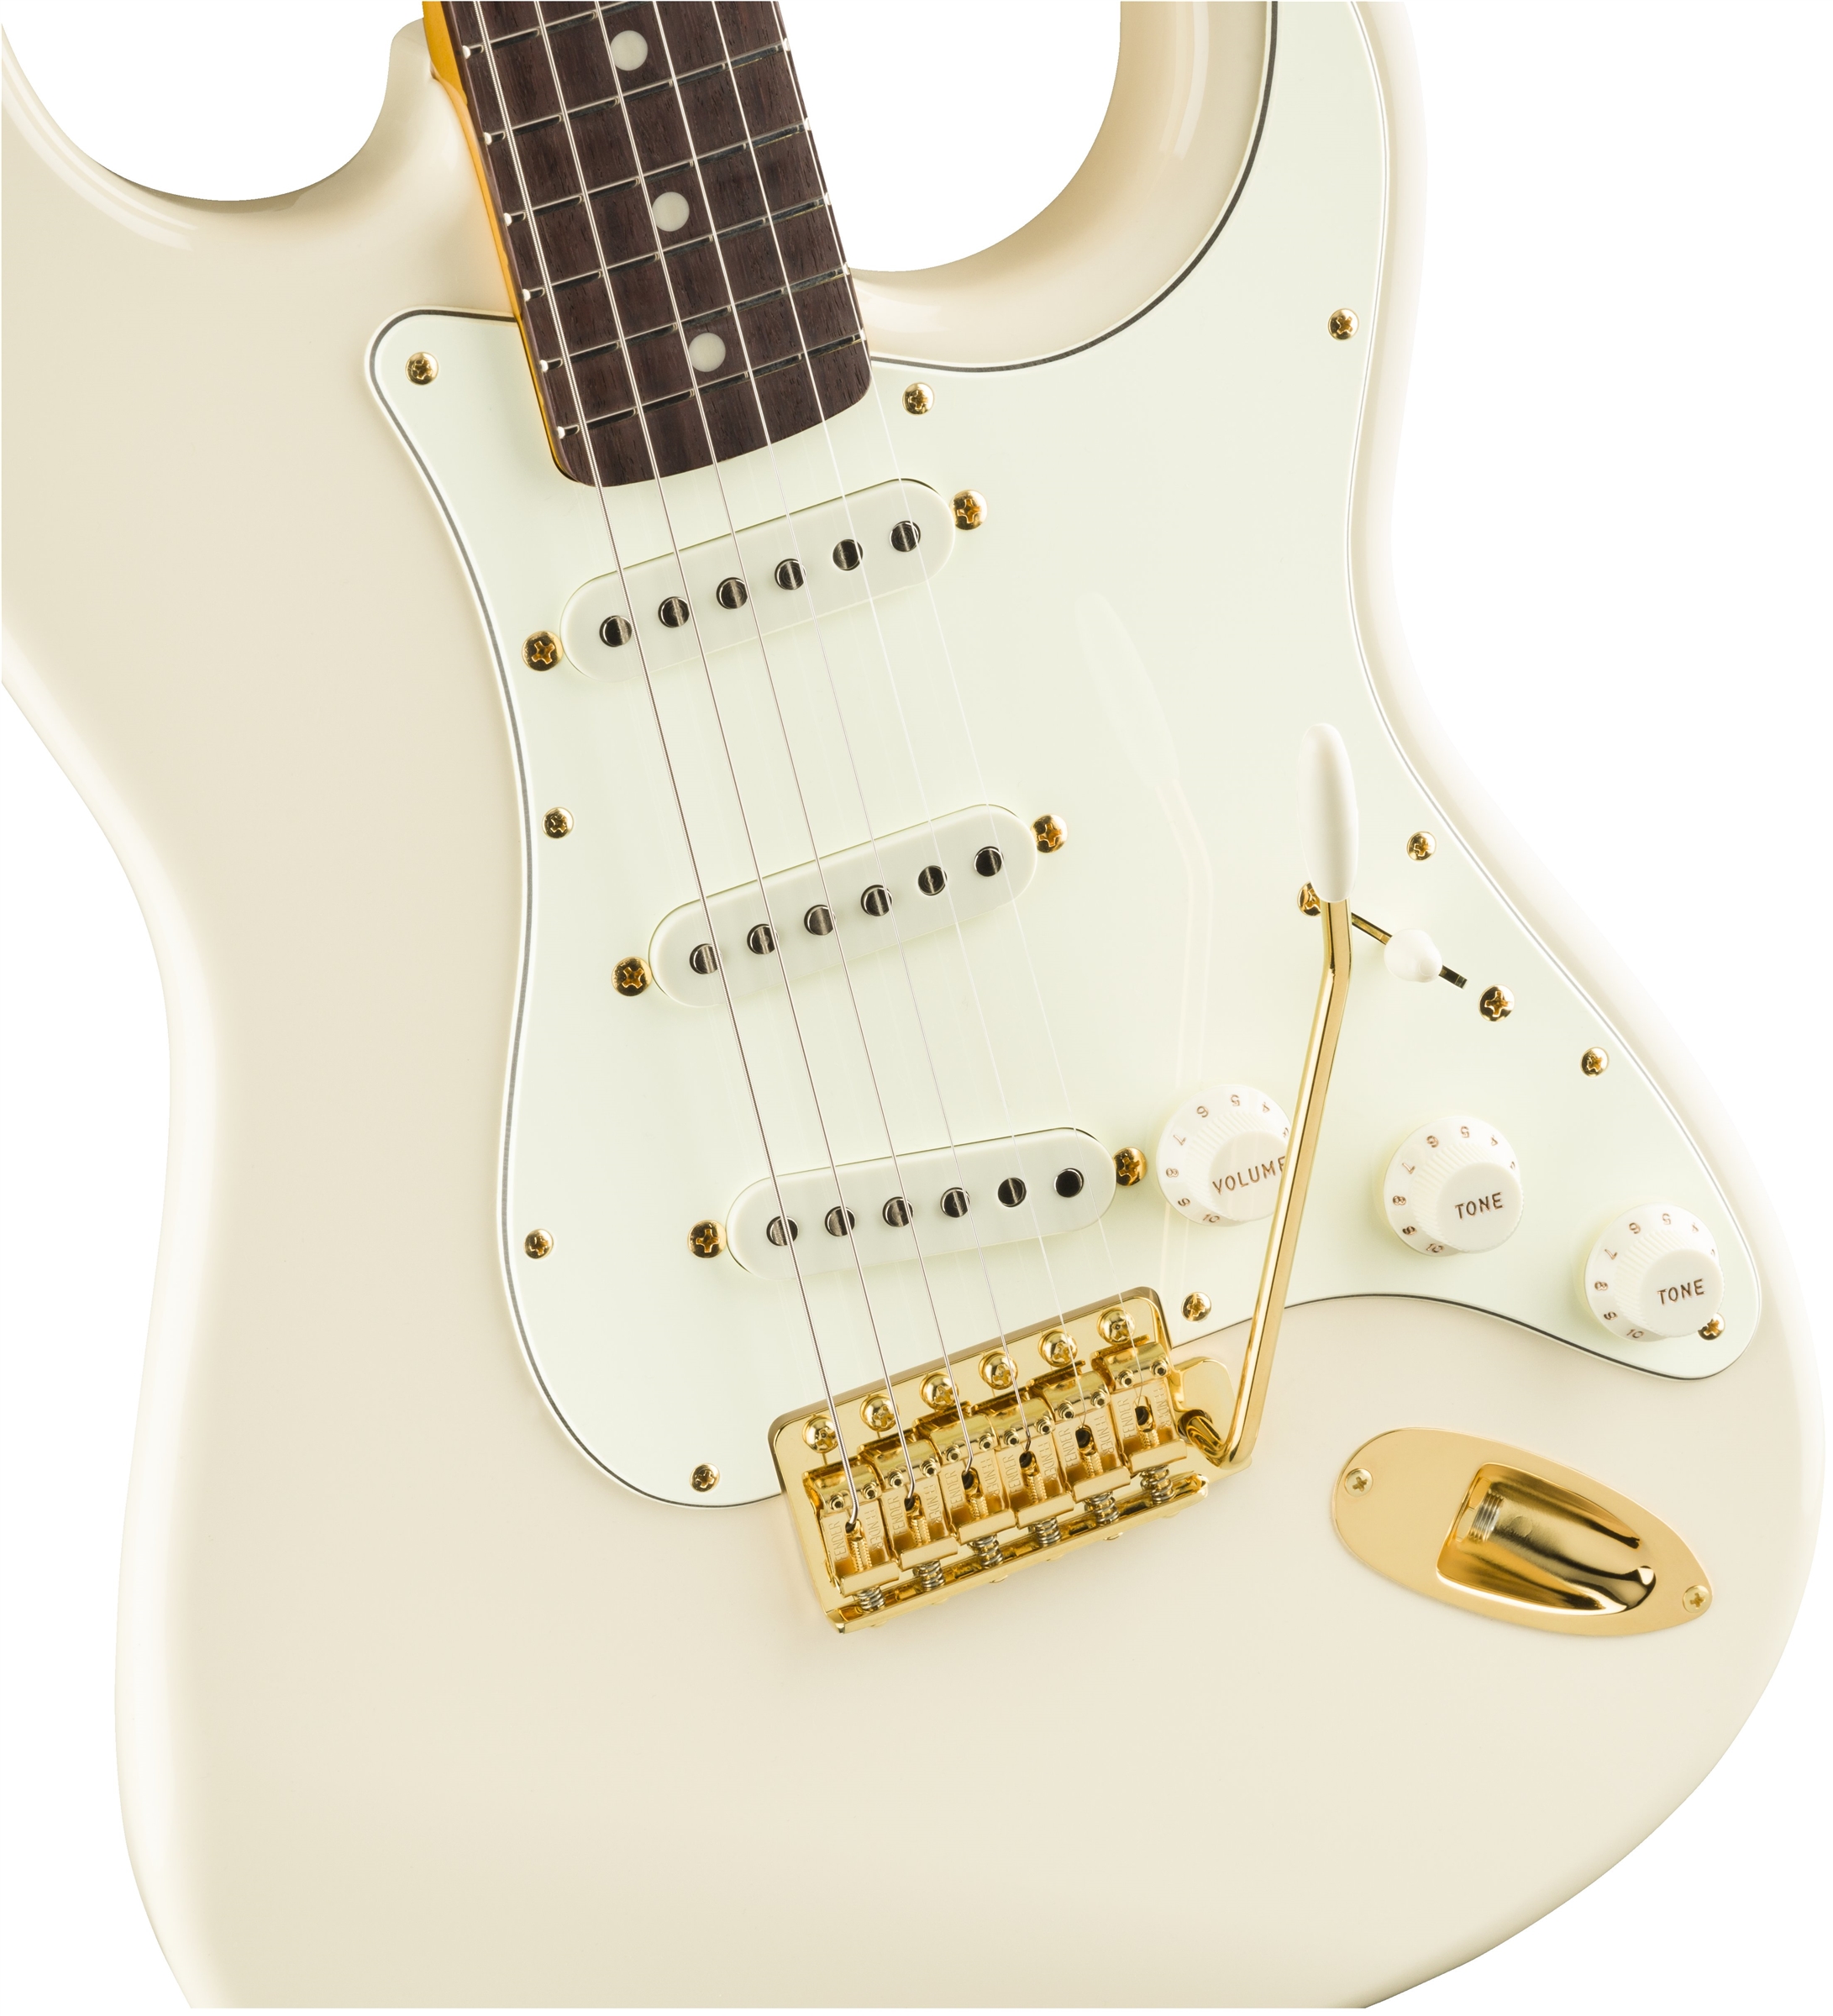 Fender Strat Daybreak Ltd 2019 Japon Gh Rw - Olympic White - Str shape electric guitar - Variation 4